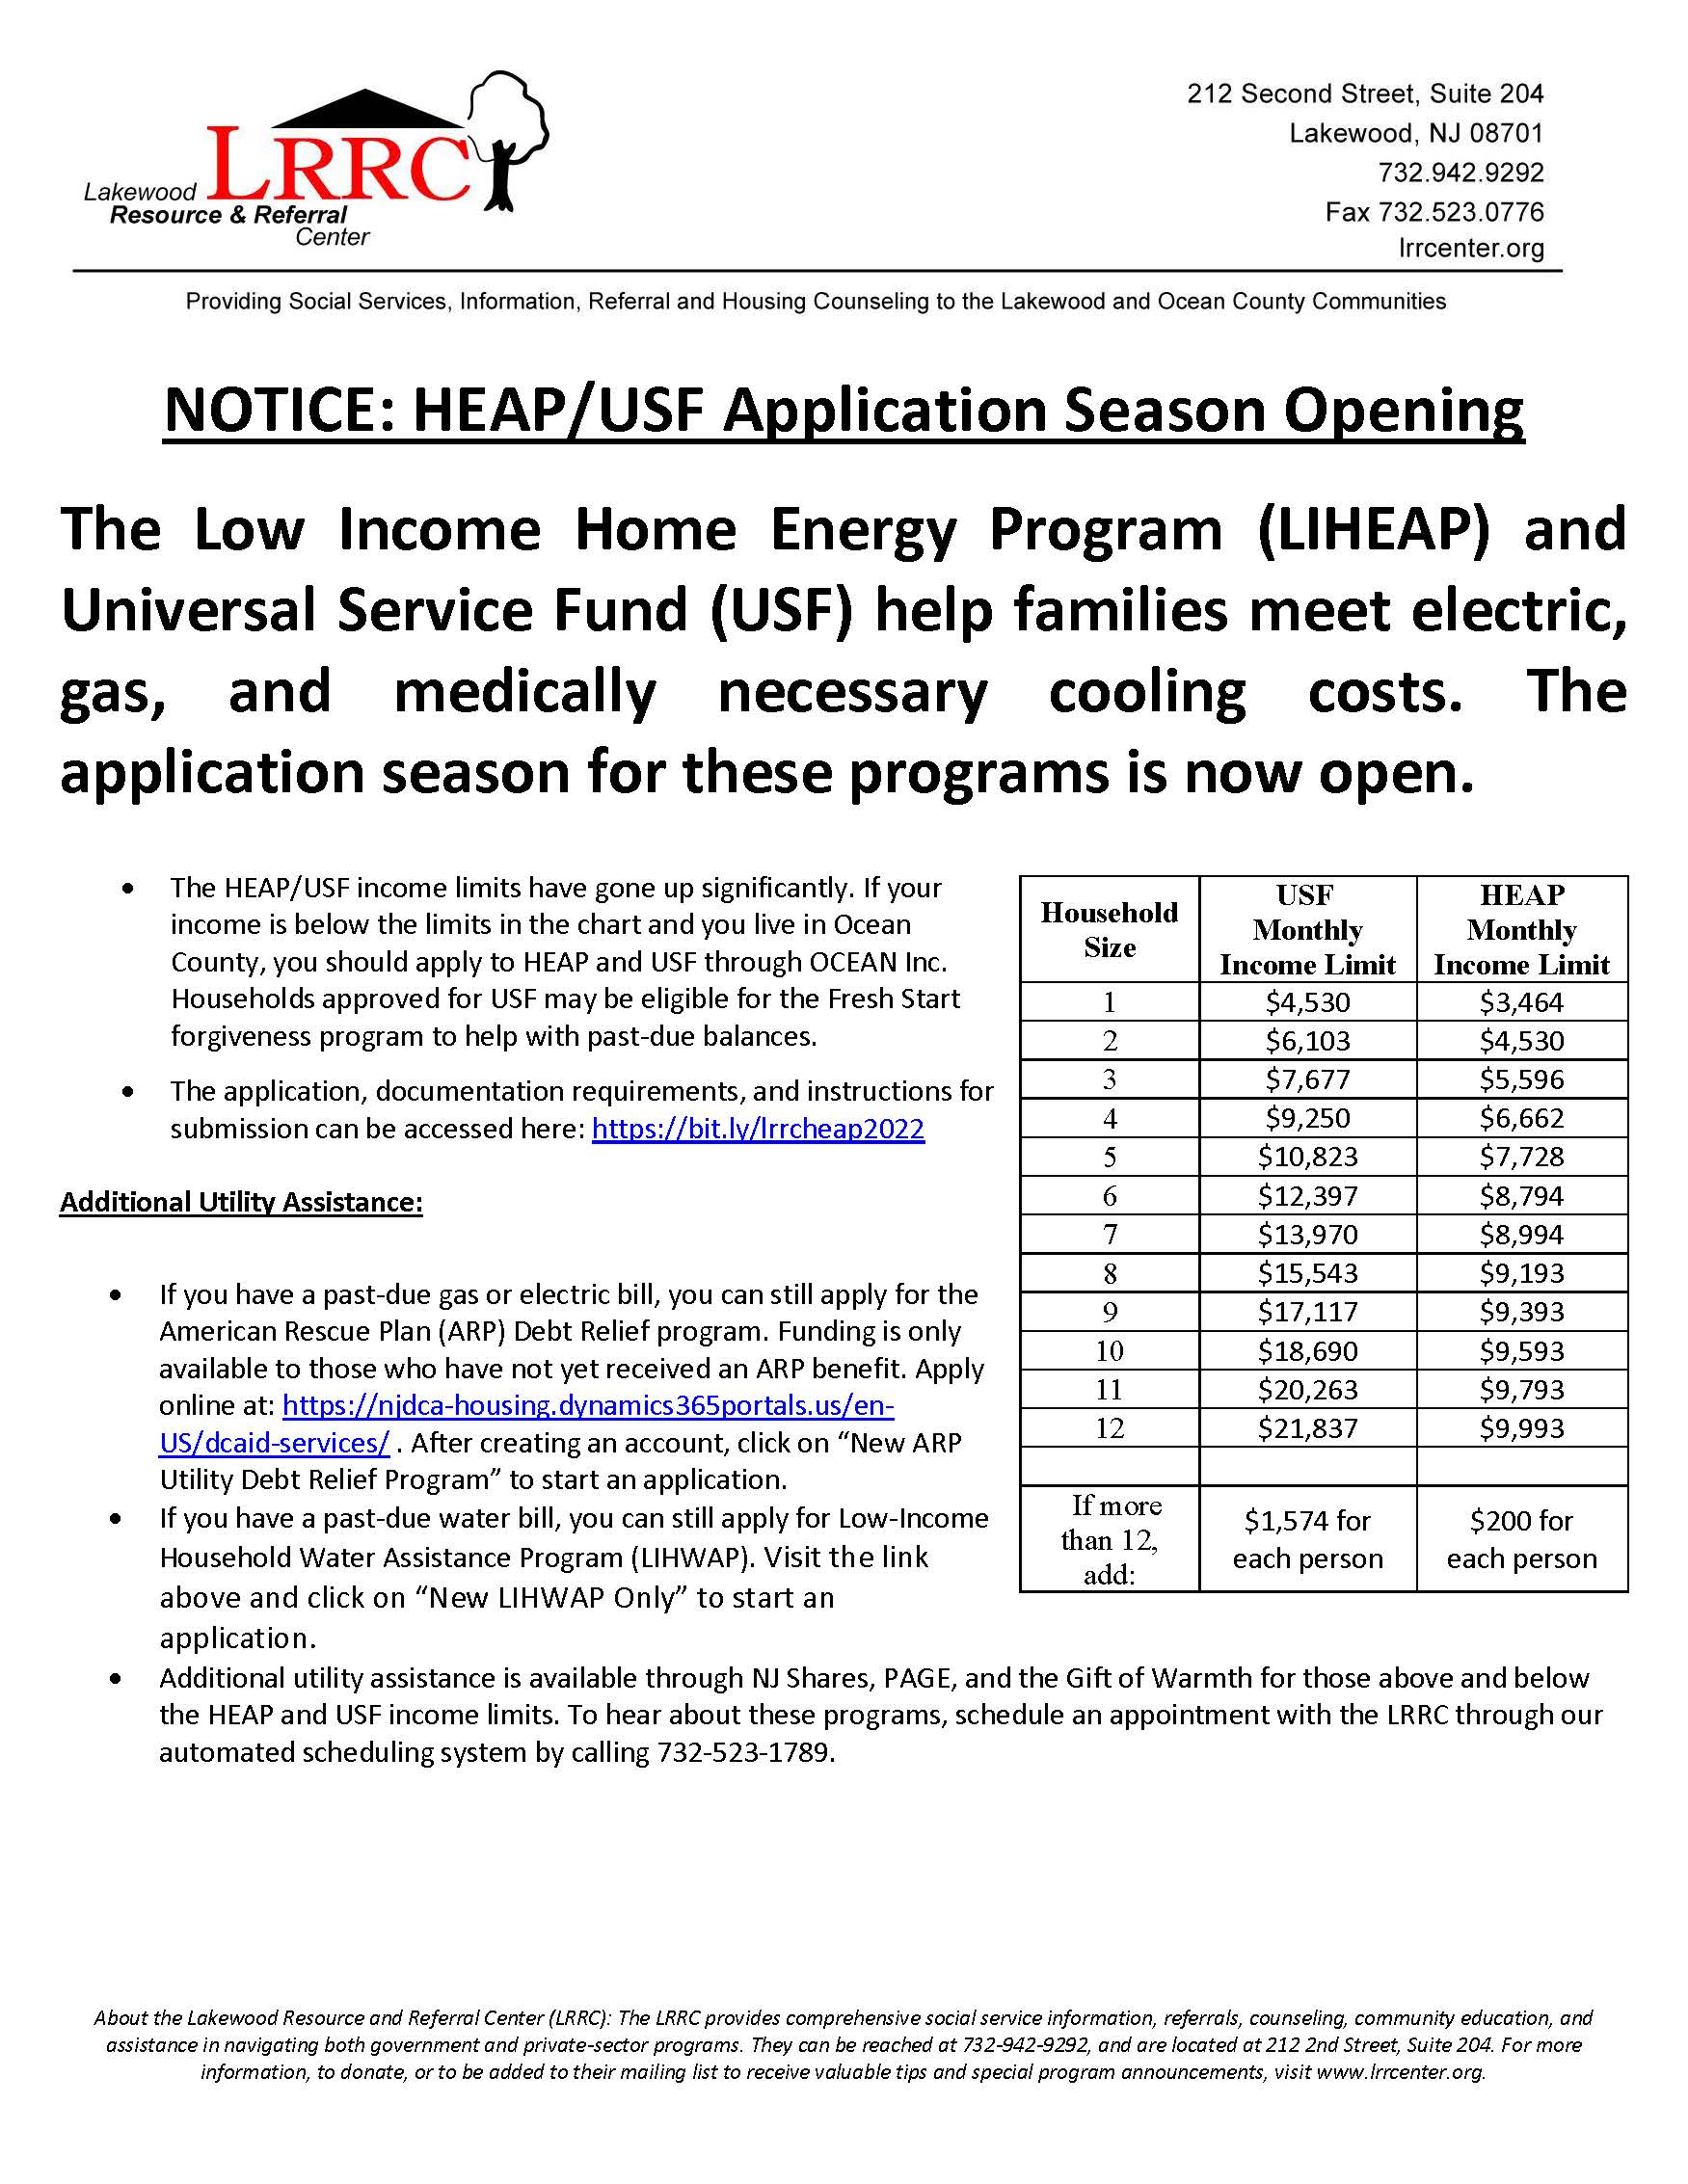 HEAP/USF Application Season Opening